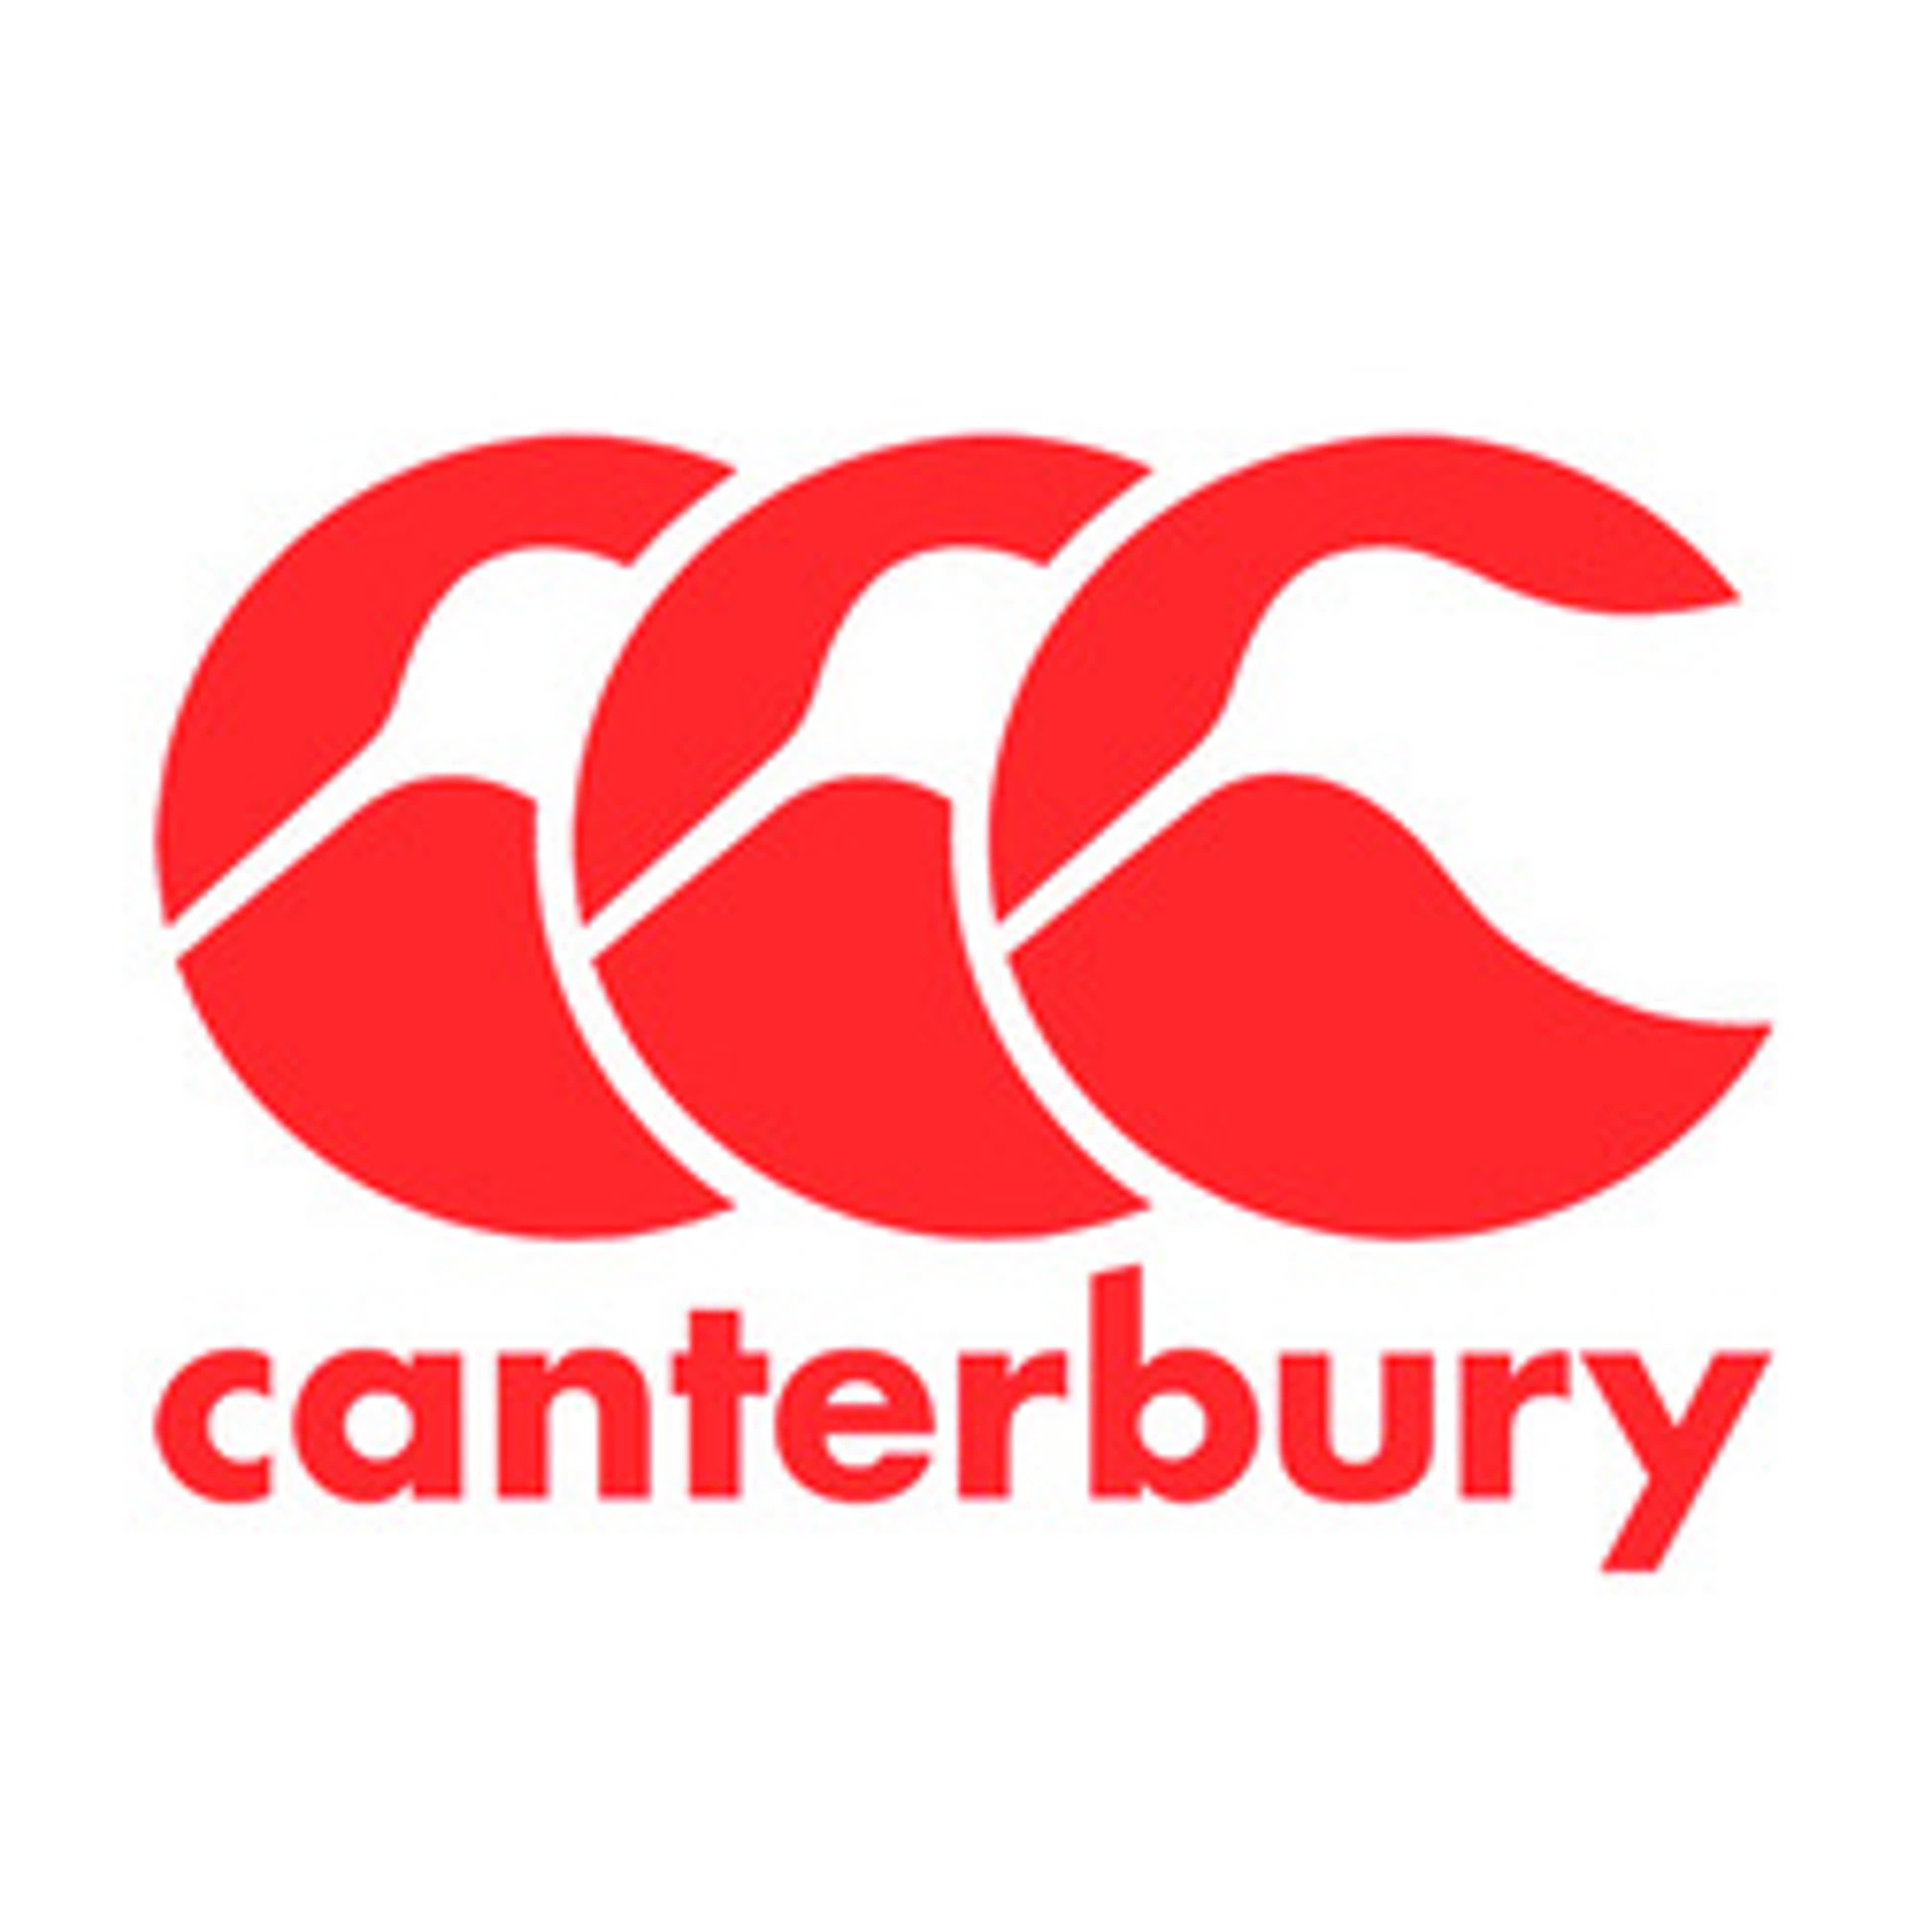  canterbury 